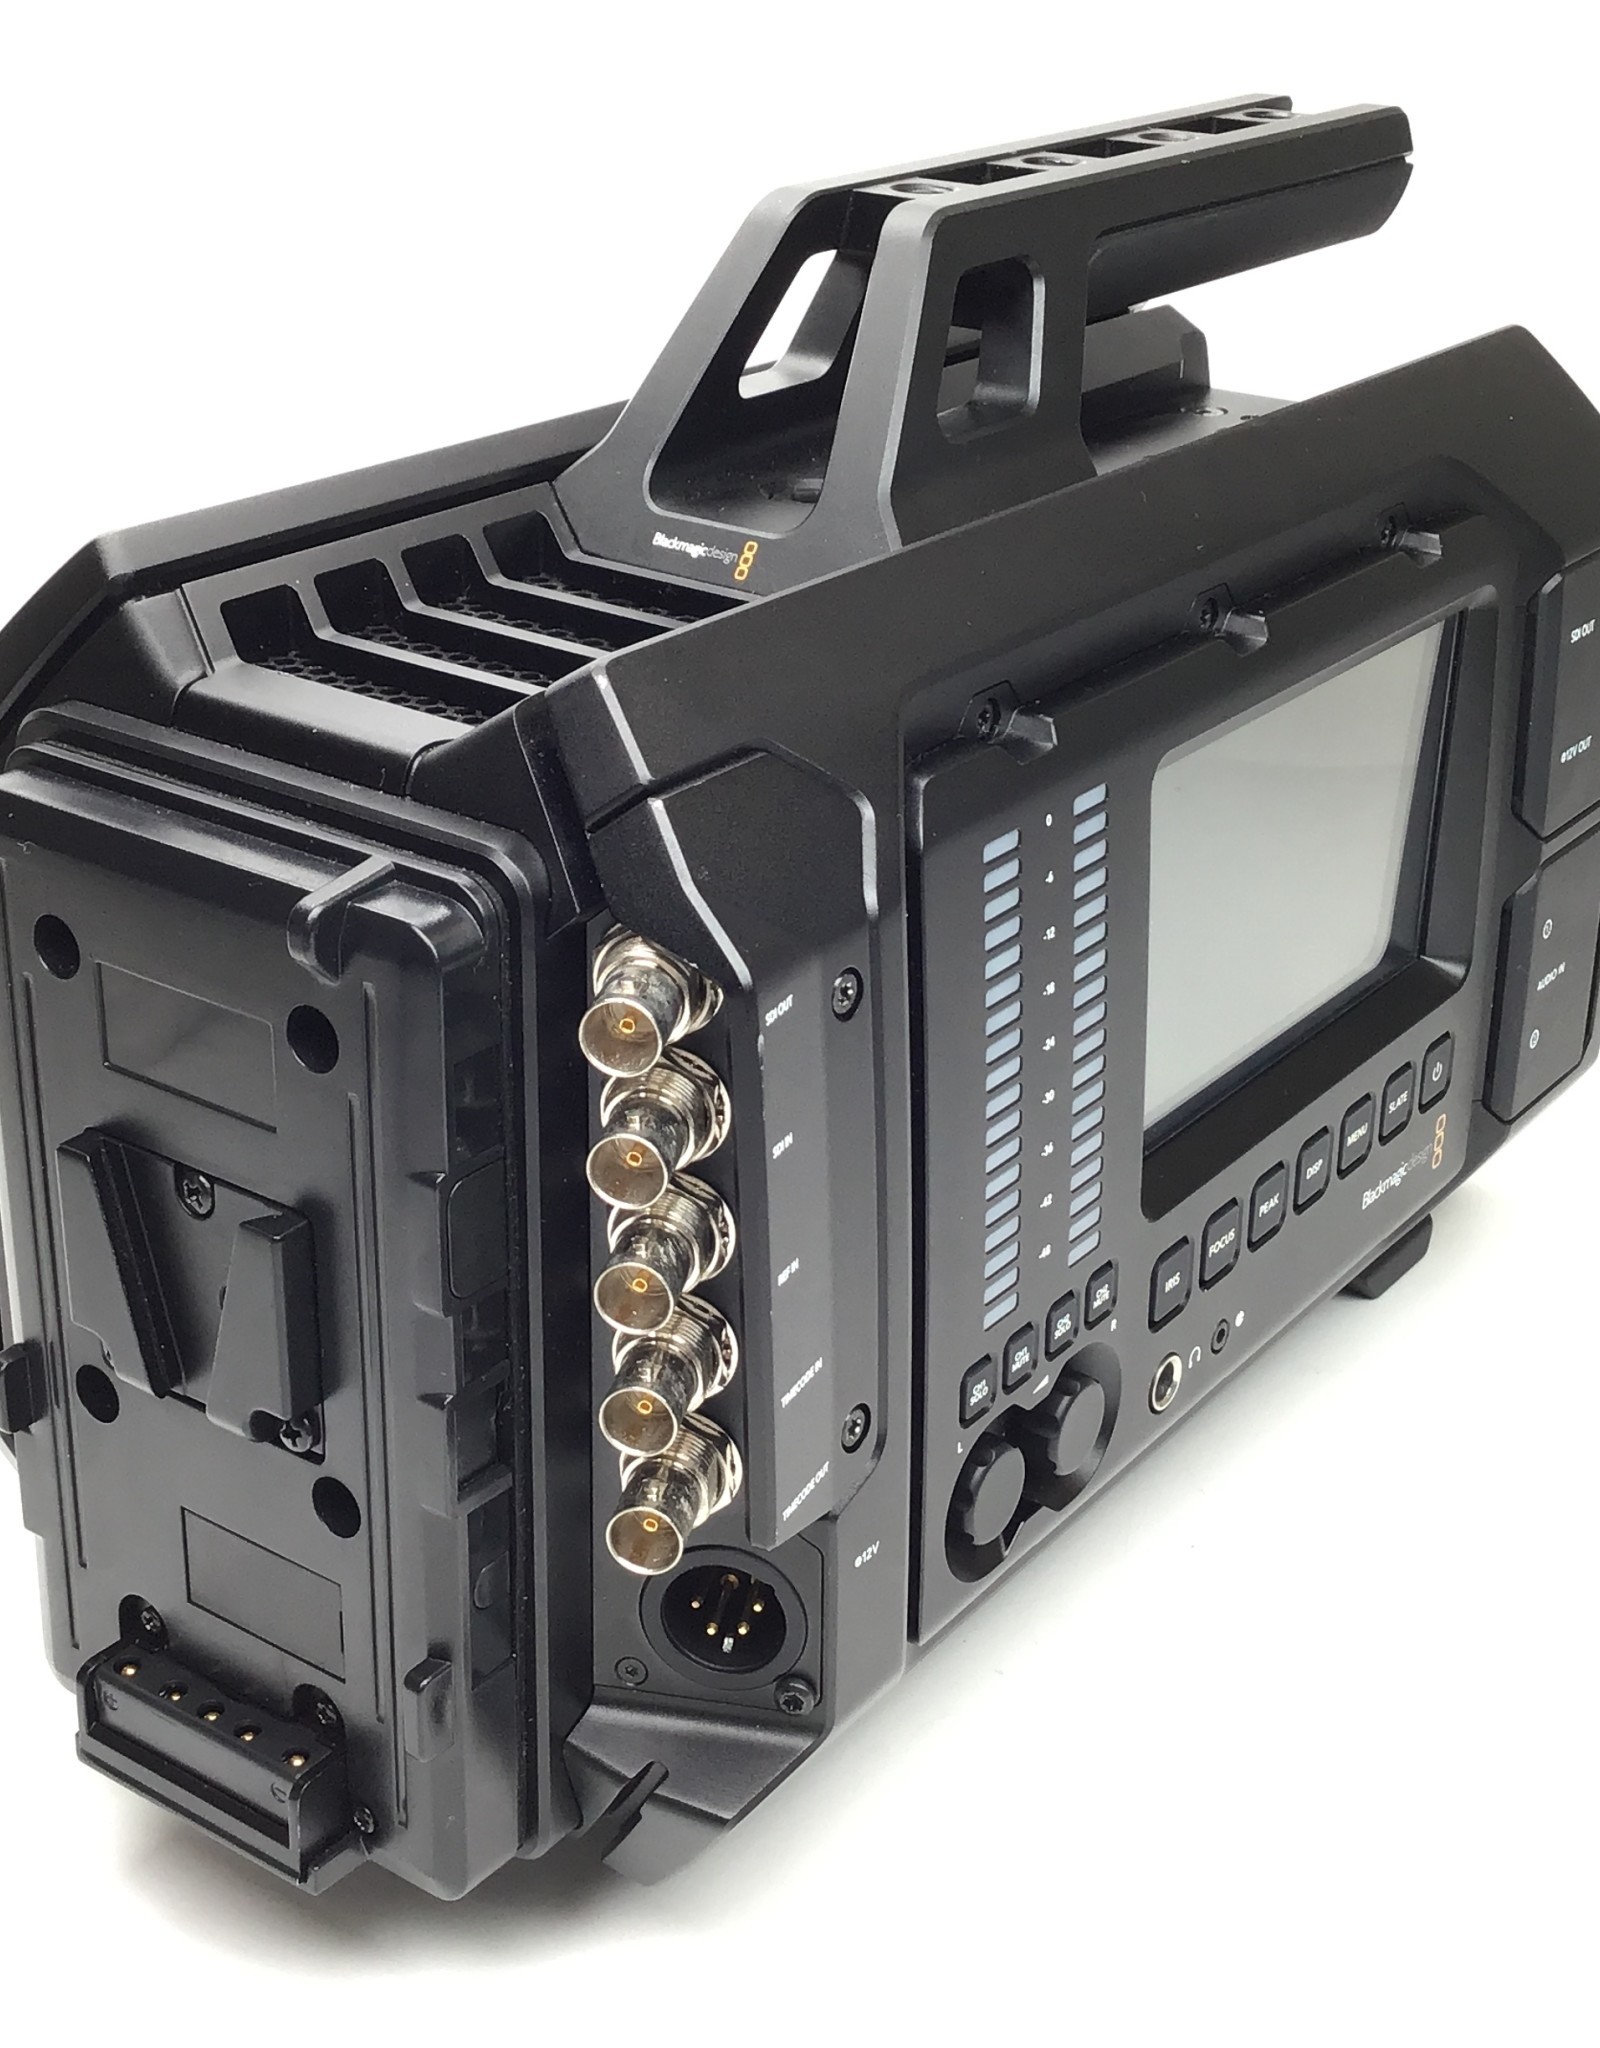 Blackmagic Design Blackmagic URSA EF 4K Camera in Box Used Good